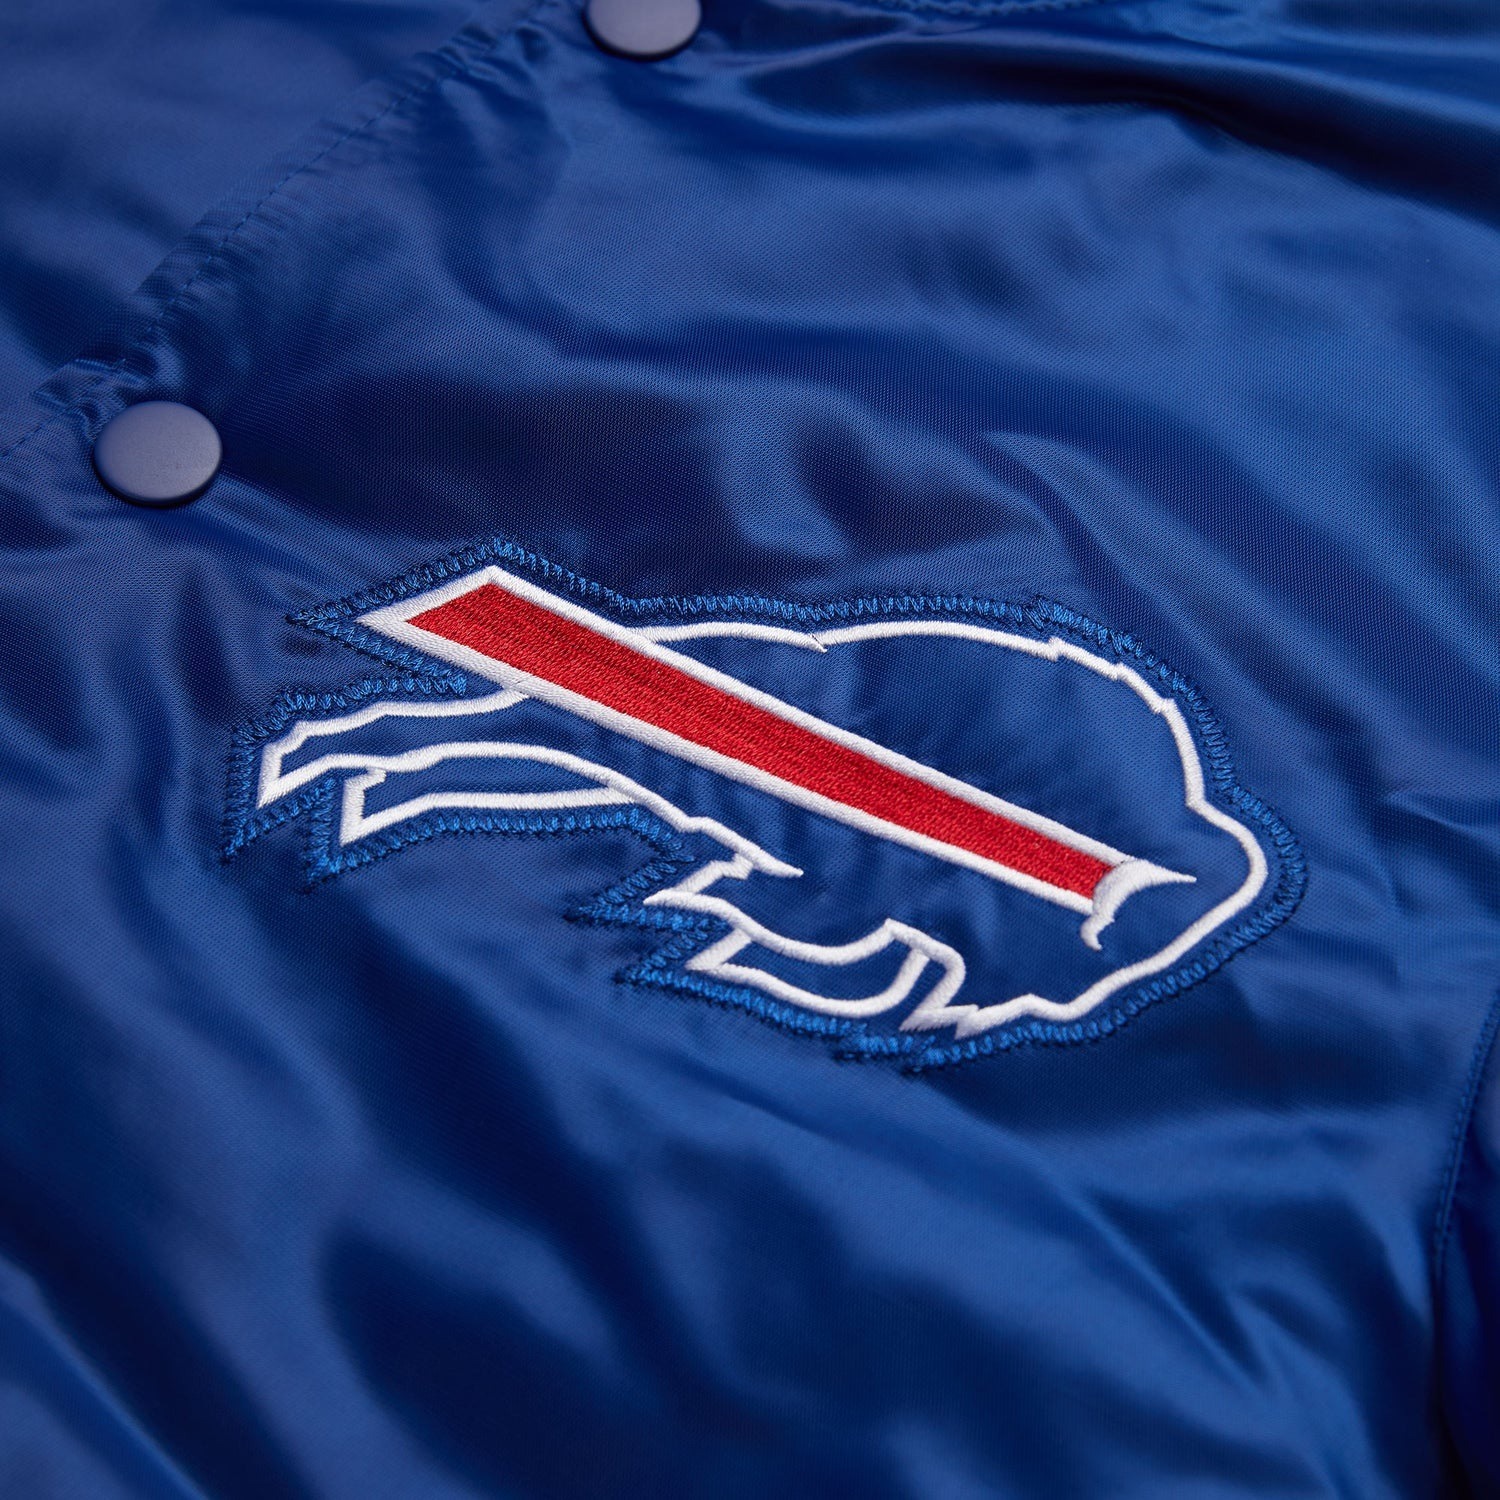 Buffalo Bills Satin Varsity Jacket